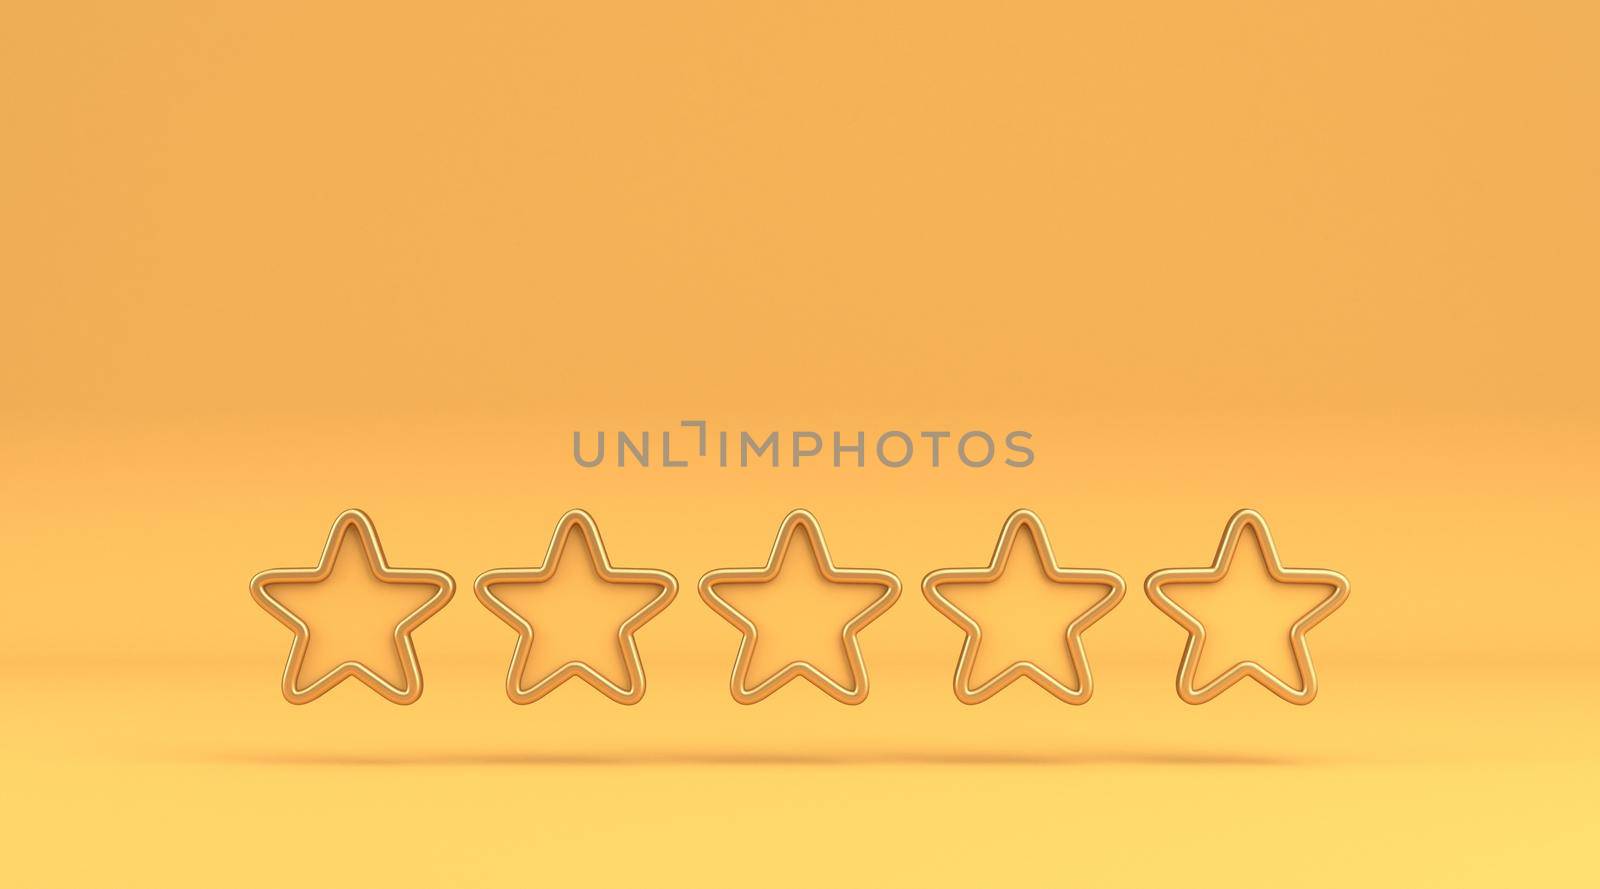 Five framed star rating sign 3D by djmilic